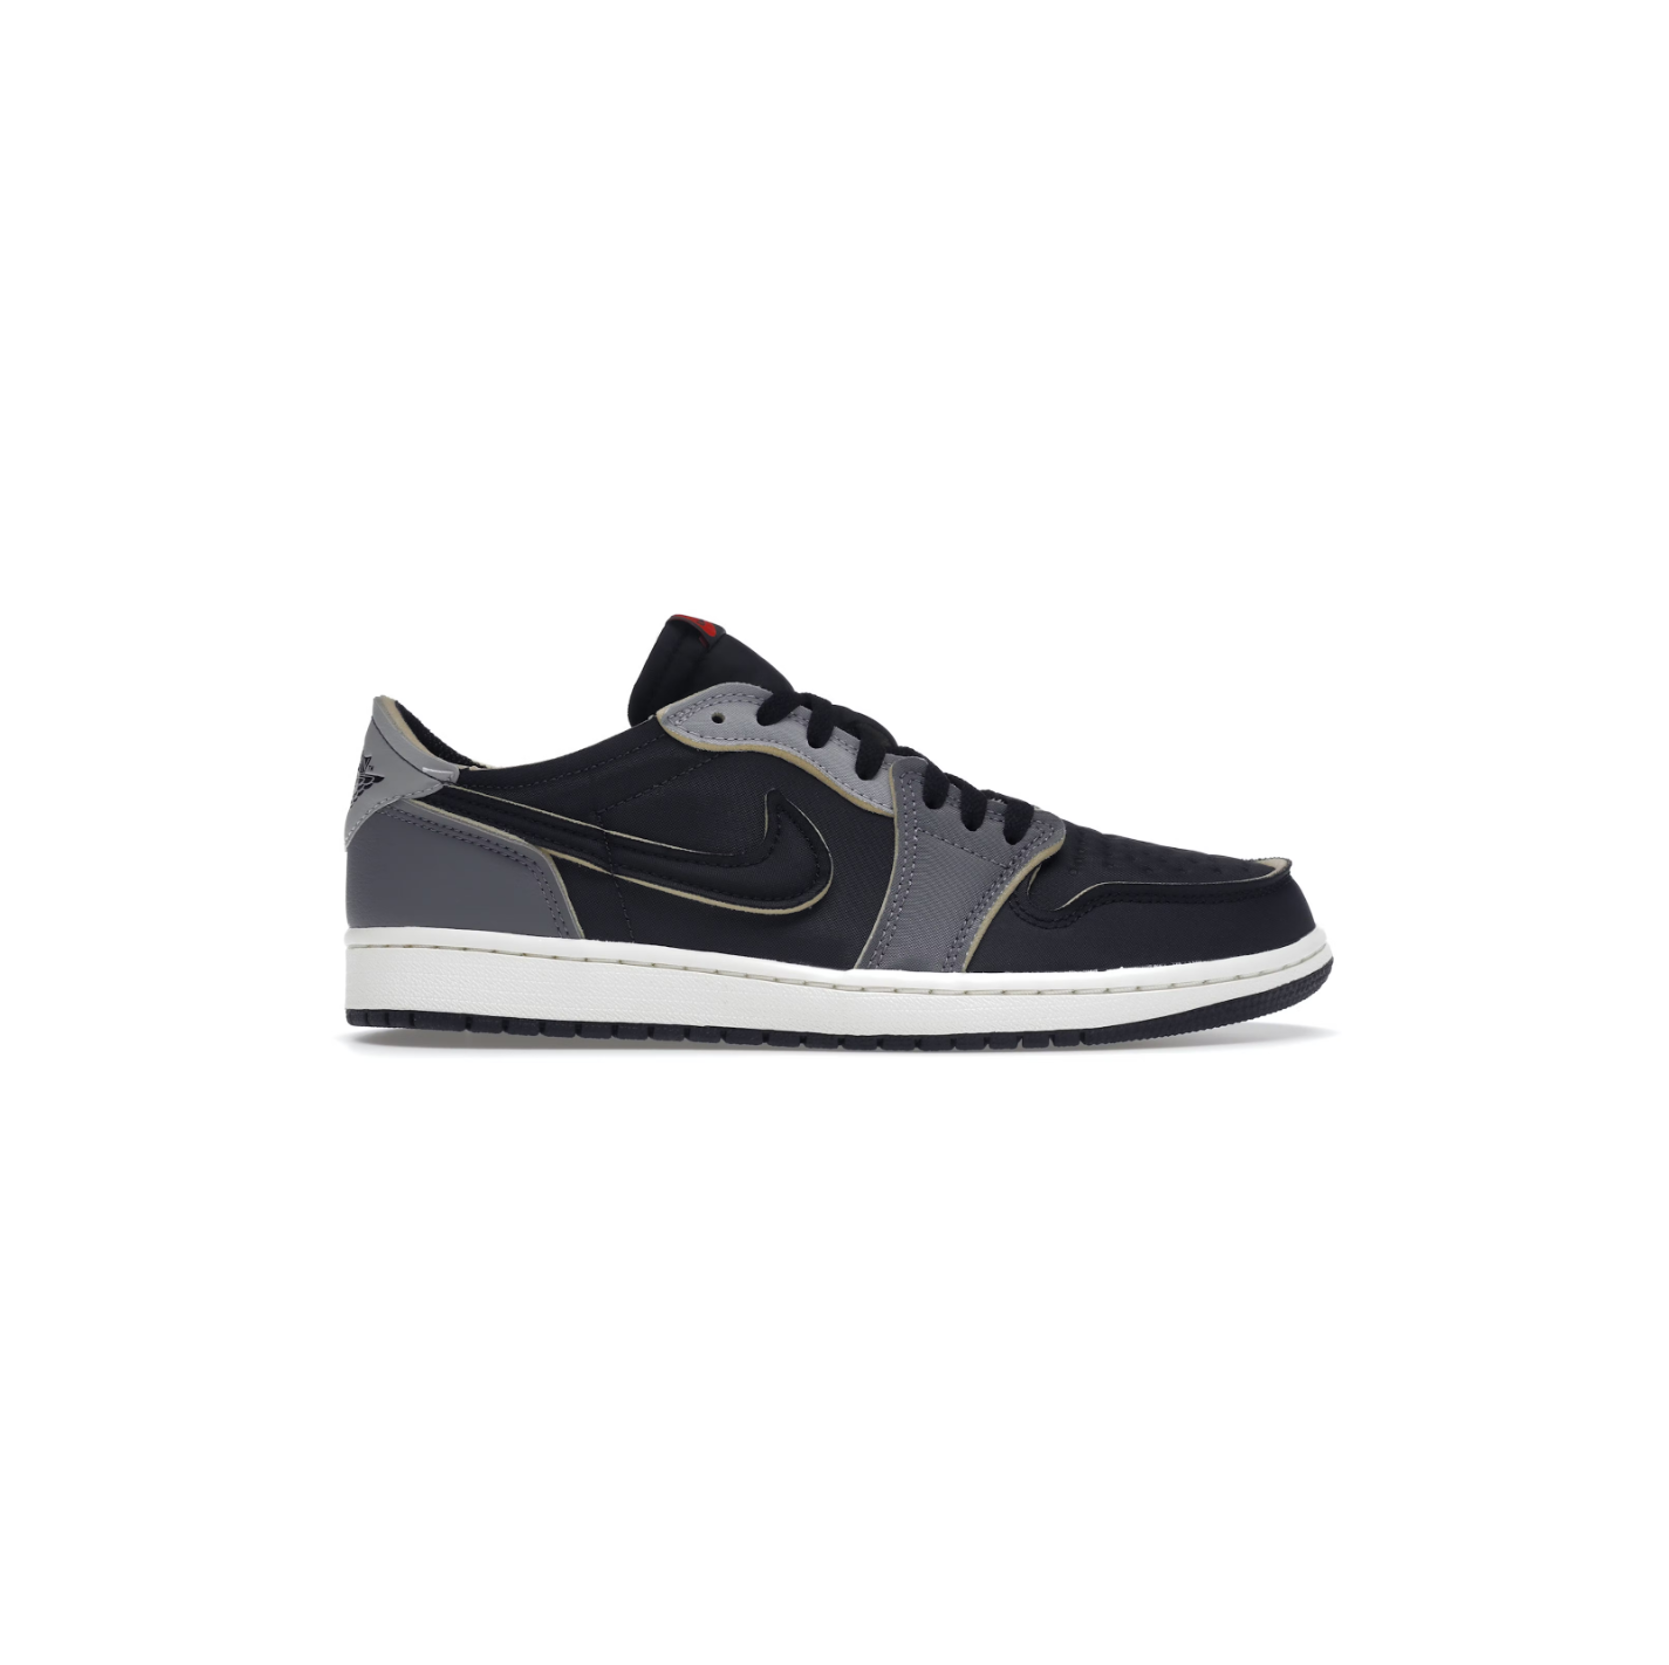 Jordan 1 Low OG EX Black Smoke Grey - Silhouette Sneakers & Art